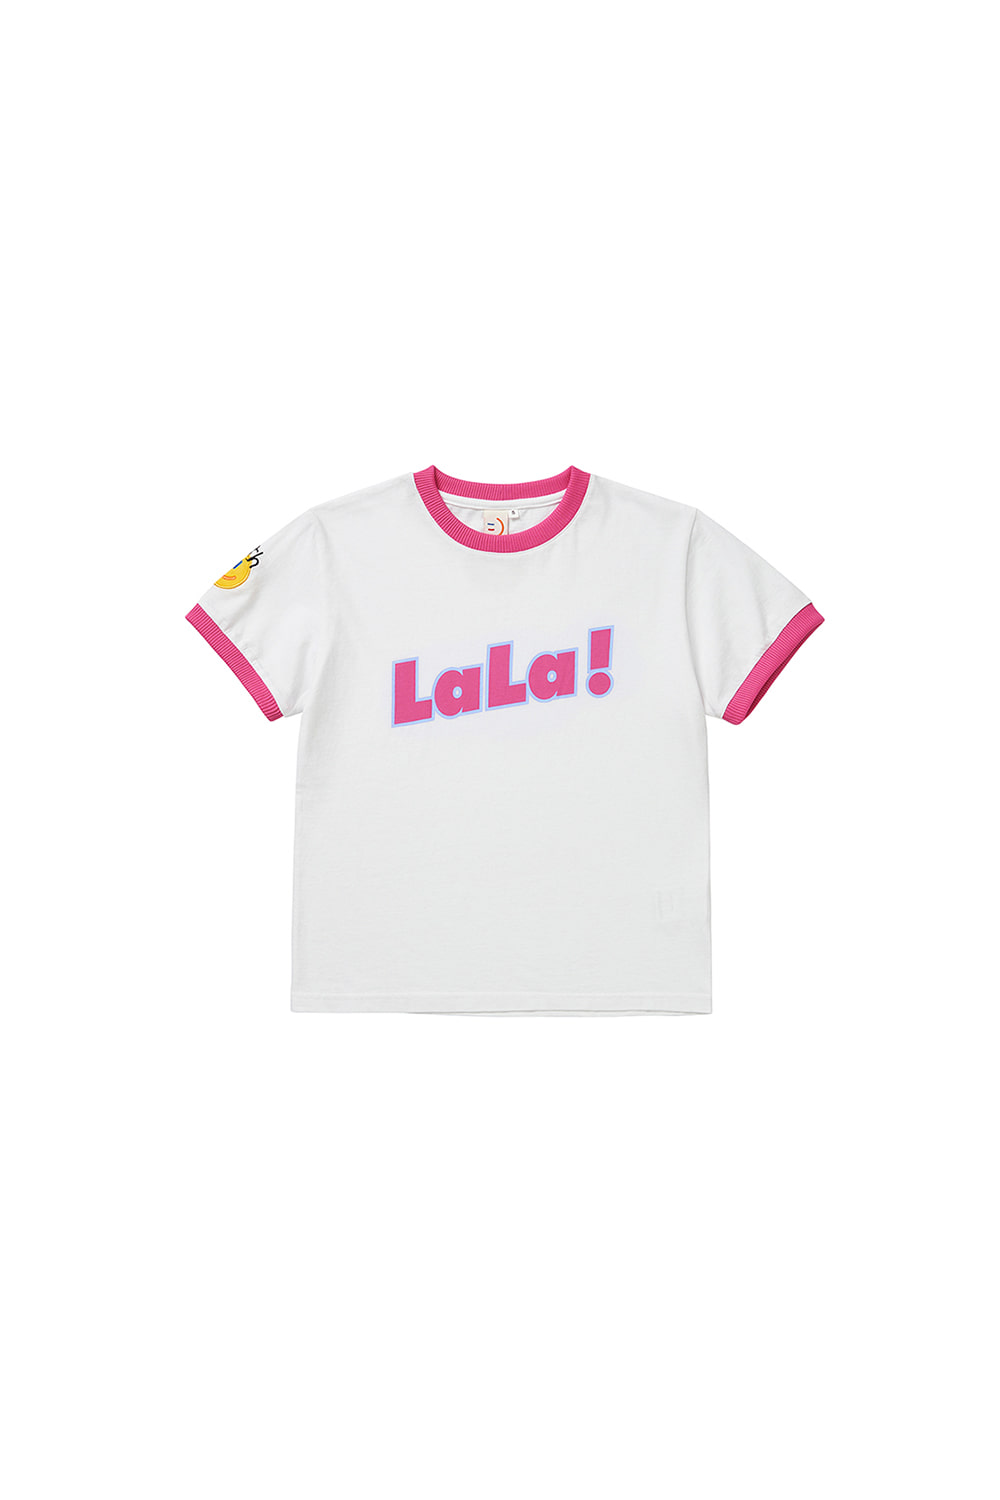 LaLa Twotone T-shirt [Pink]